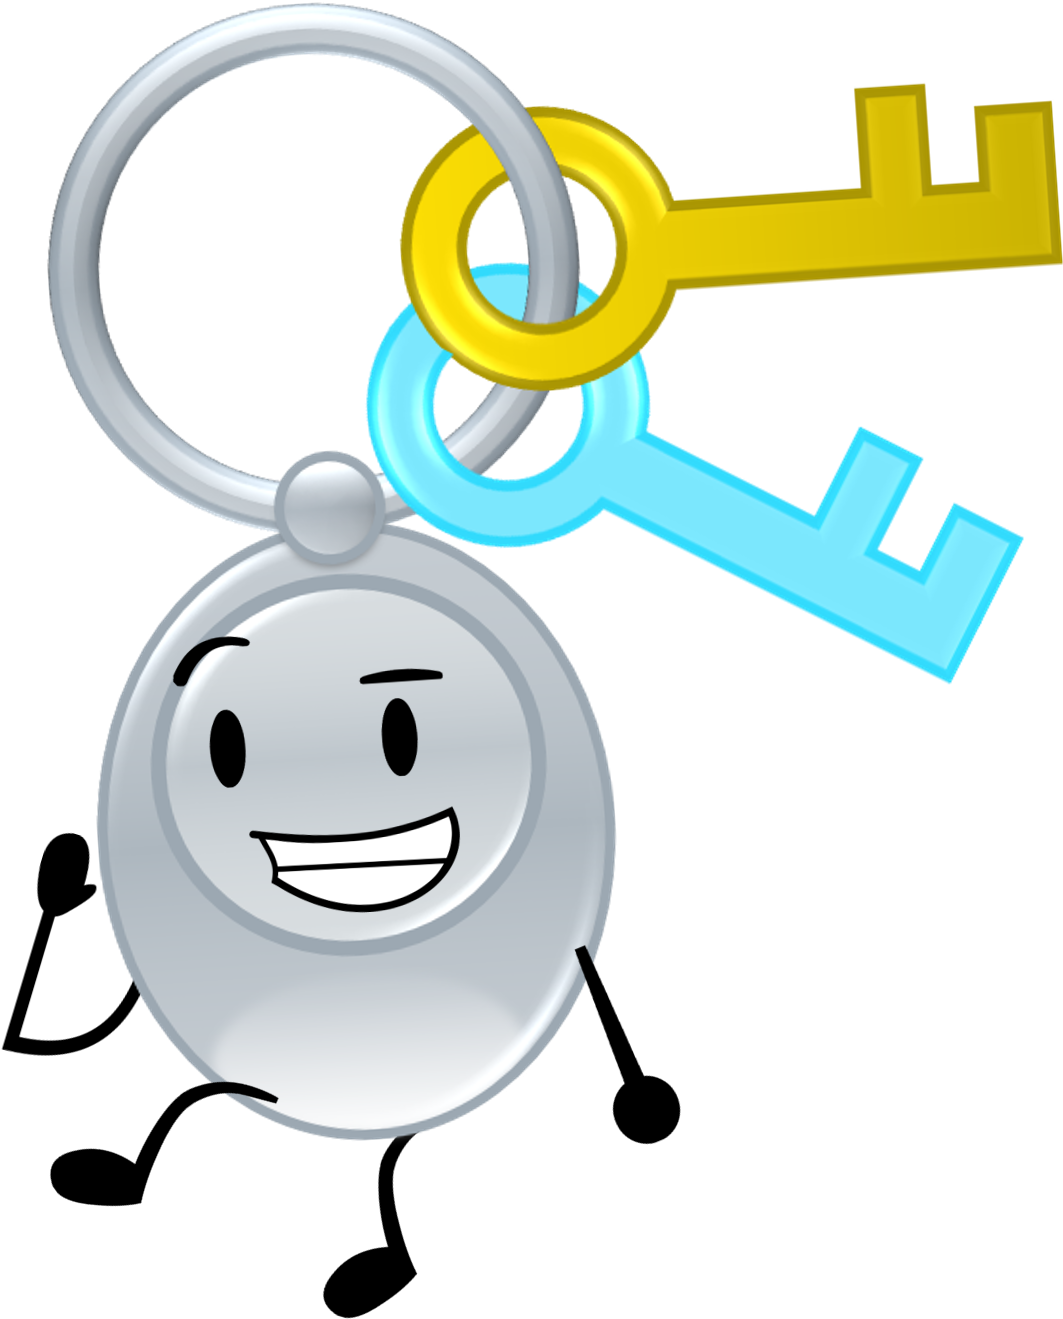 Key Chain - Key Chain (1137x1397)